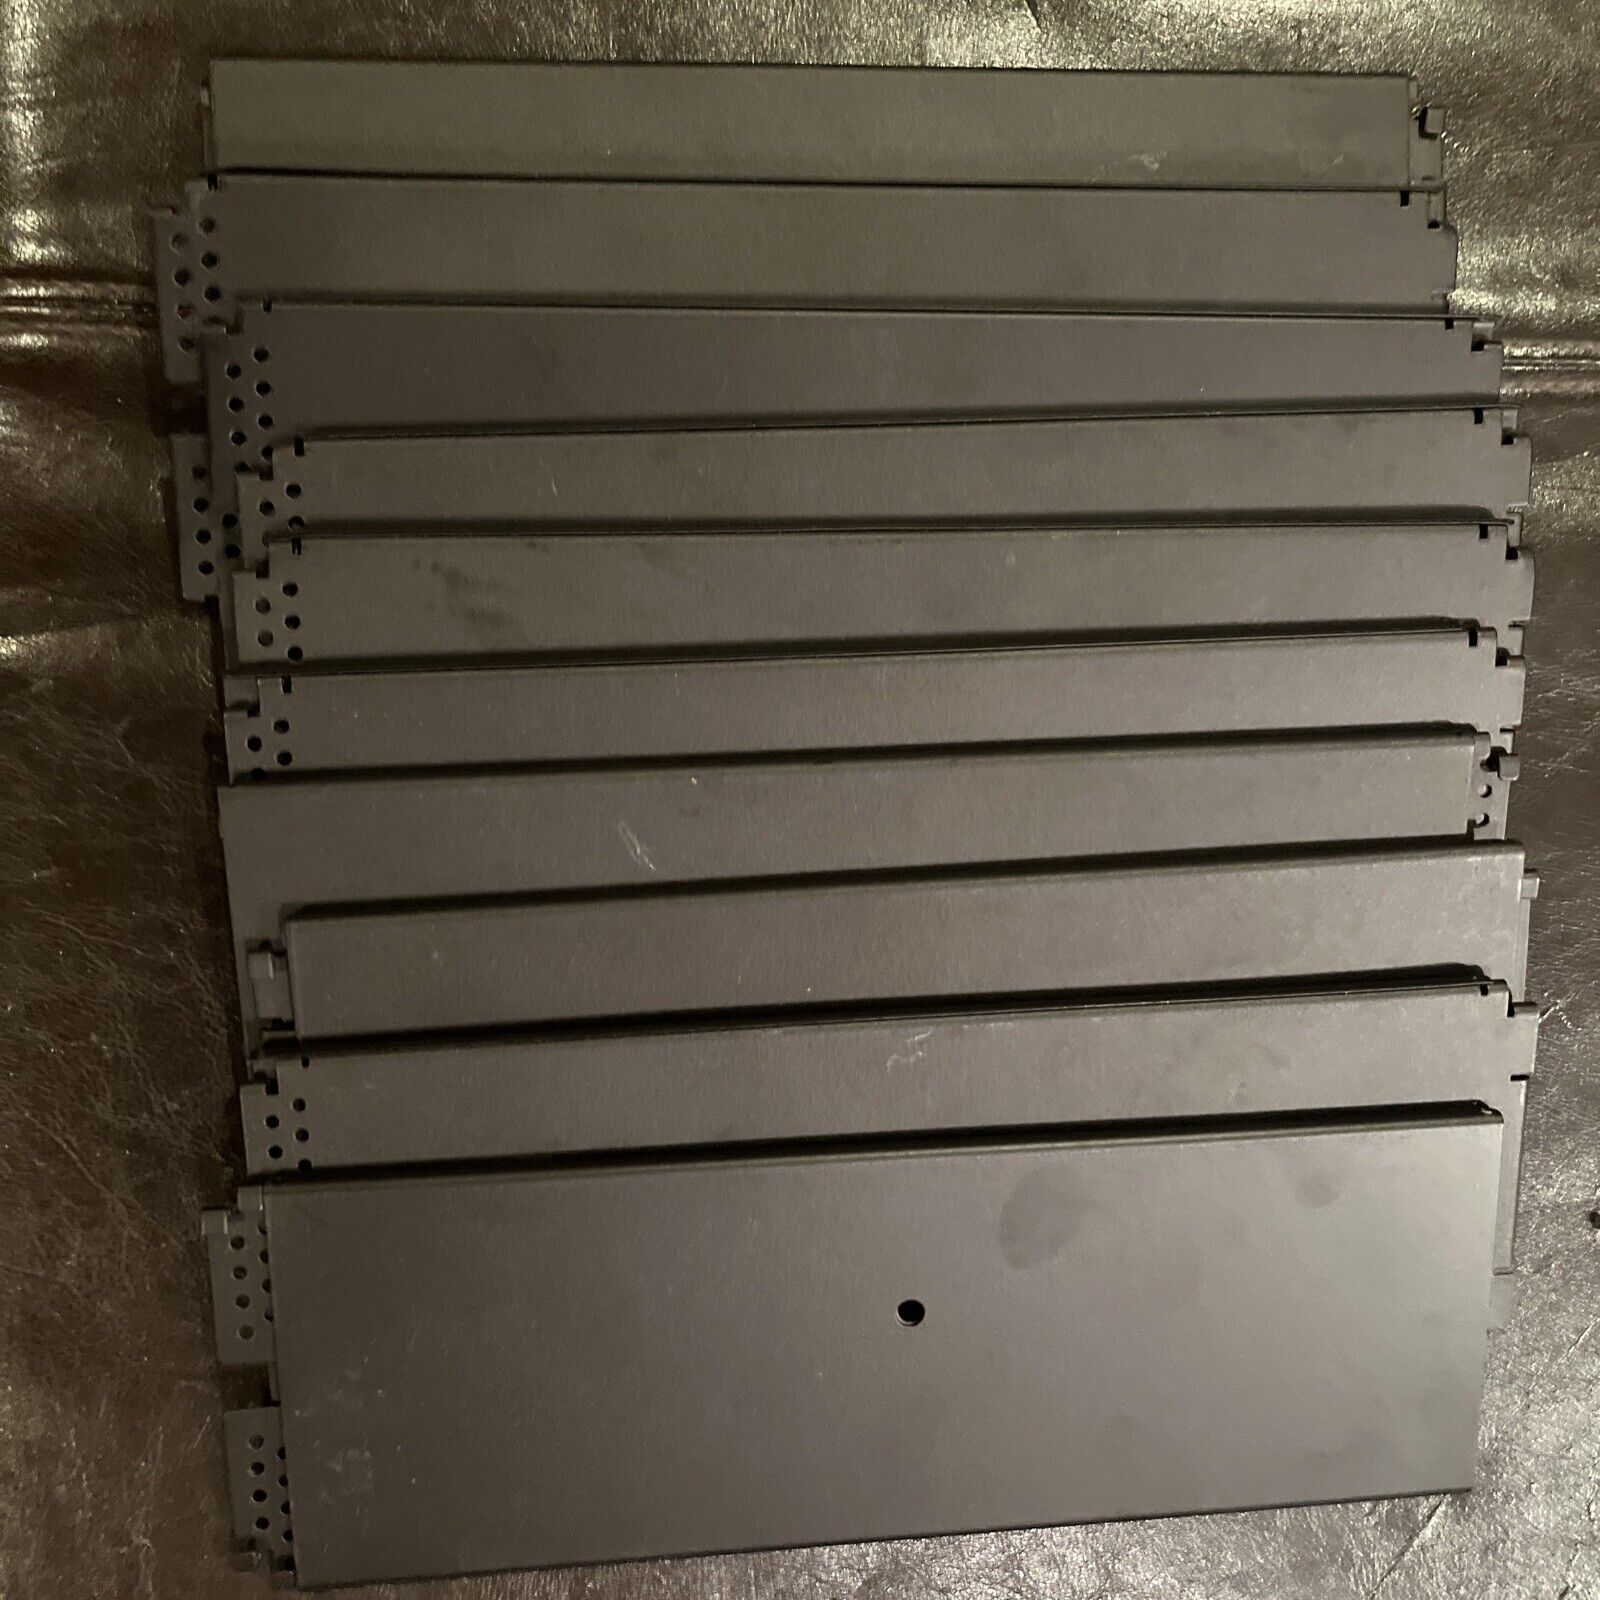 Corning M67-048 Fiber Splice Trays (Lot Of 10) Not In Original plastic